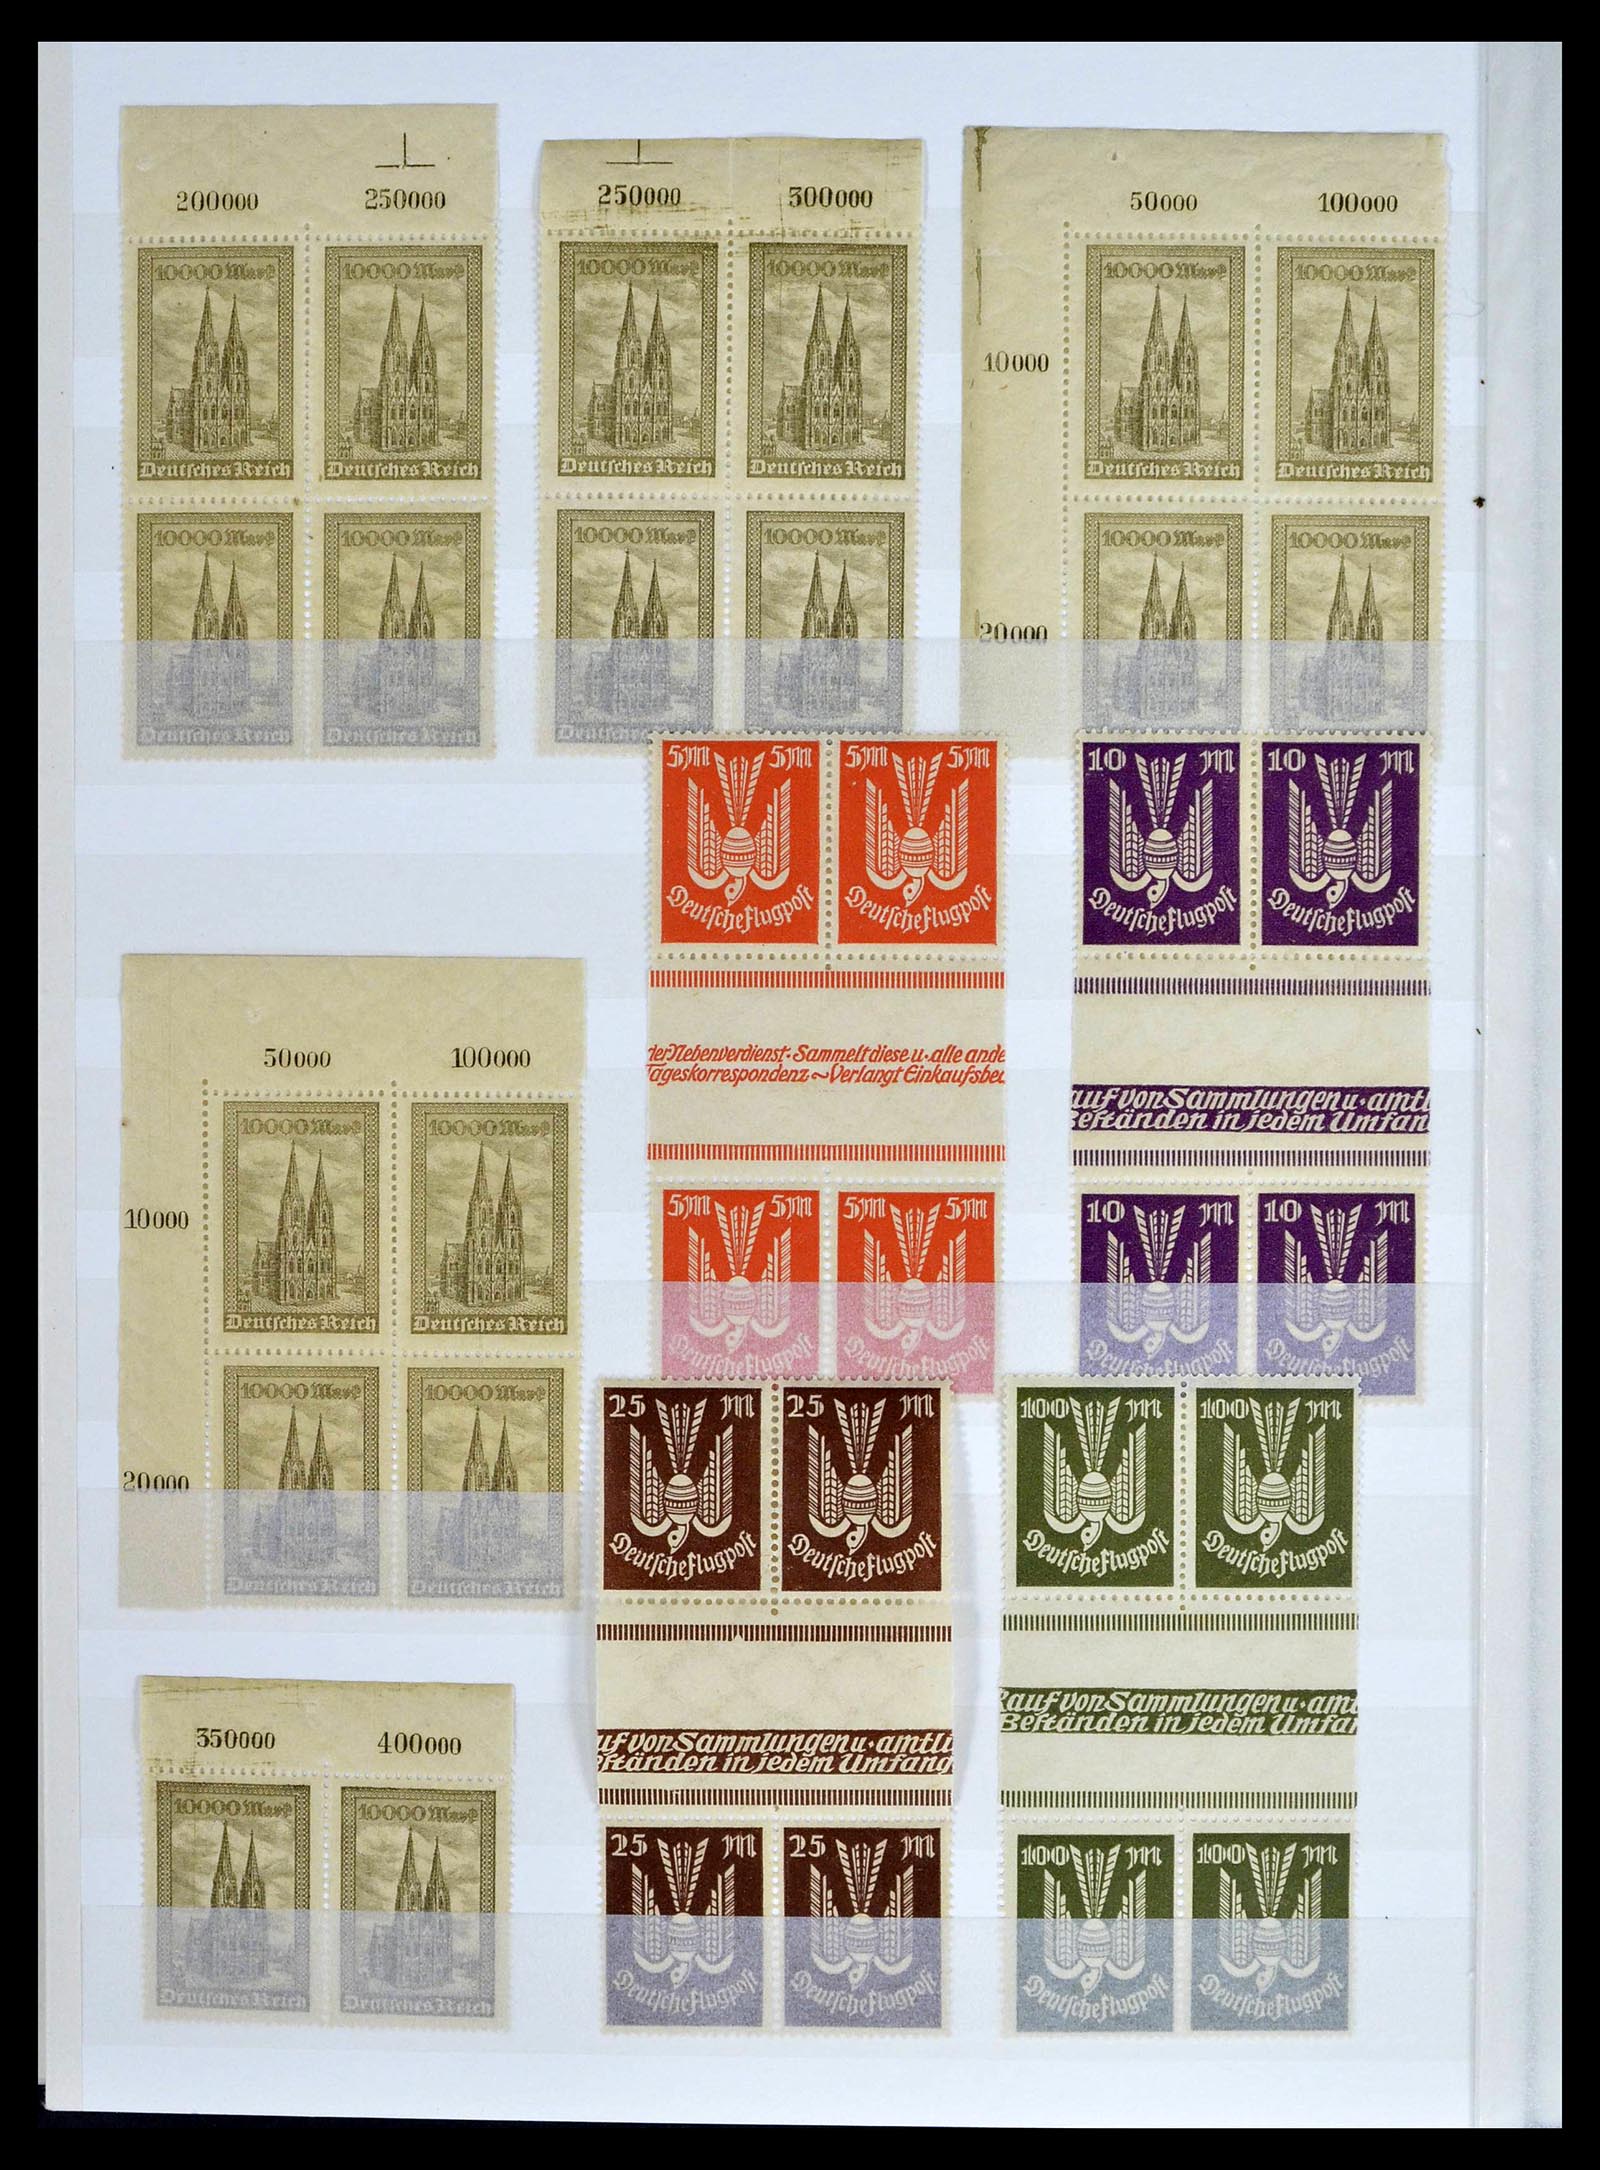 39254 0040 - Stamp collection 39254 German Reich MNH top margins.